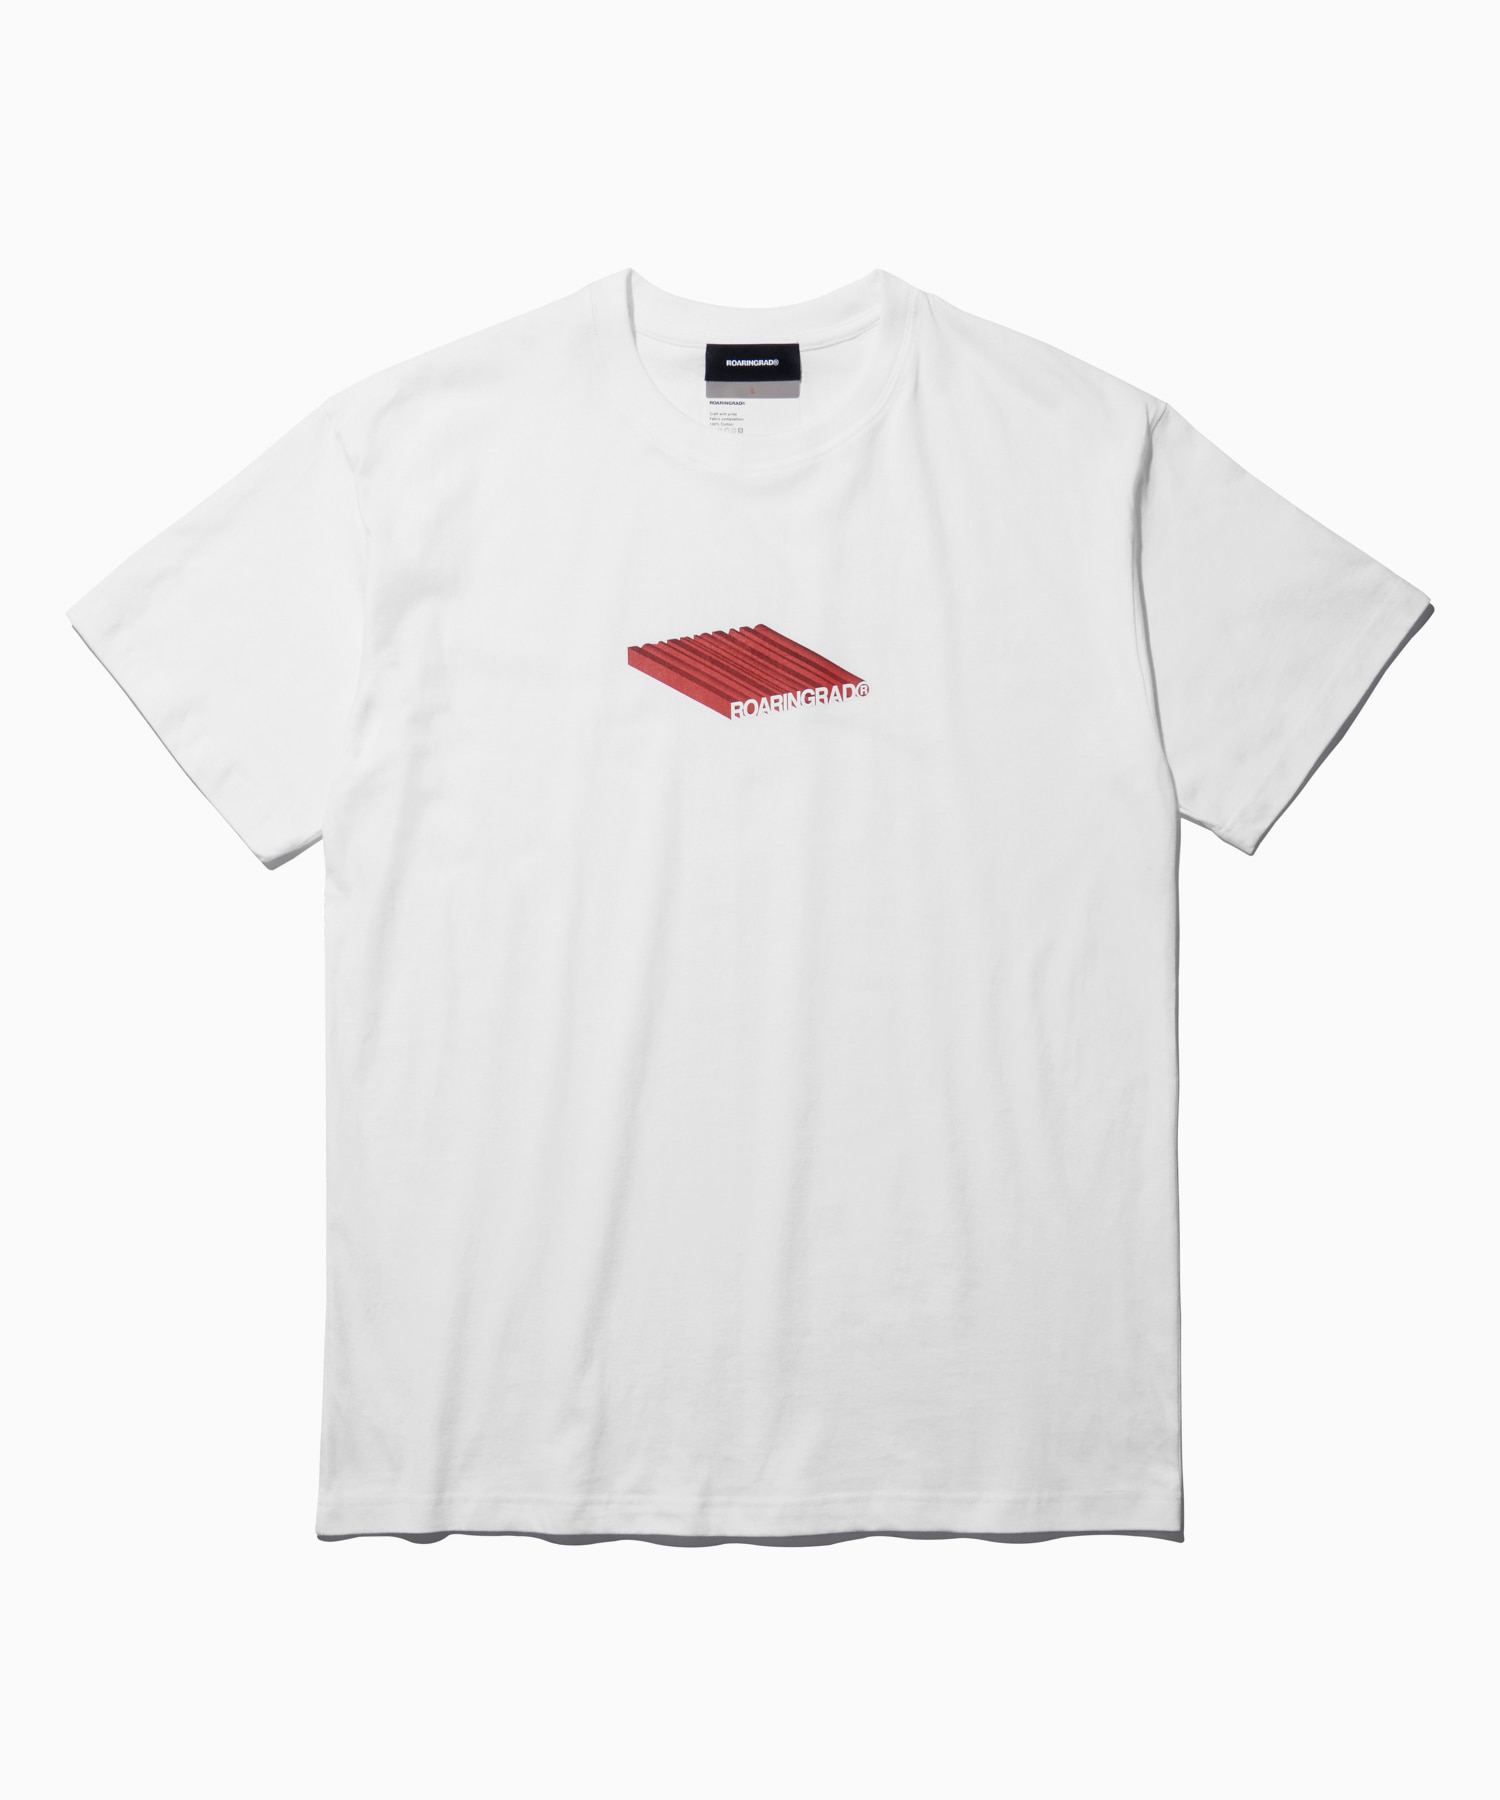 3D logo t-shirt white - 로어링라드(ROARINGRAD)